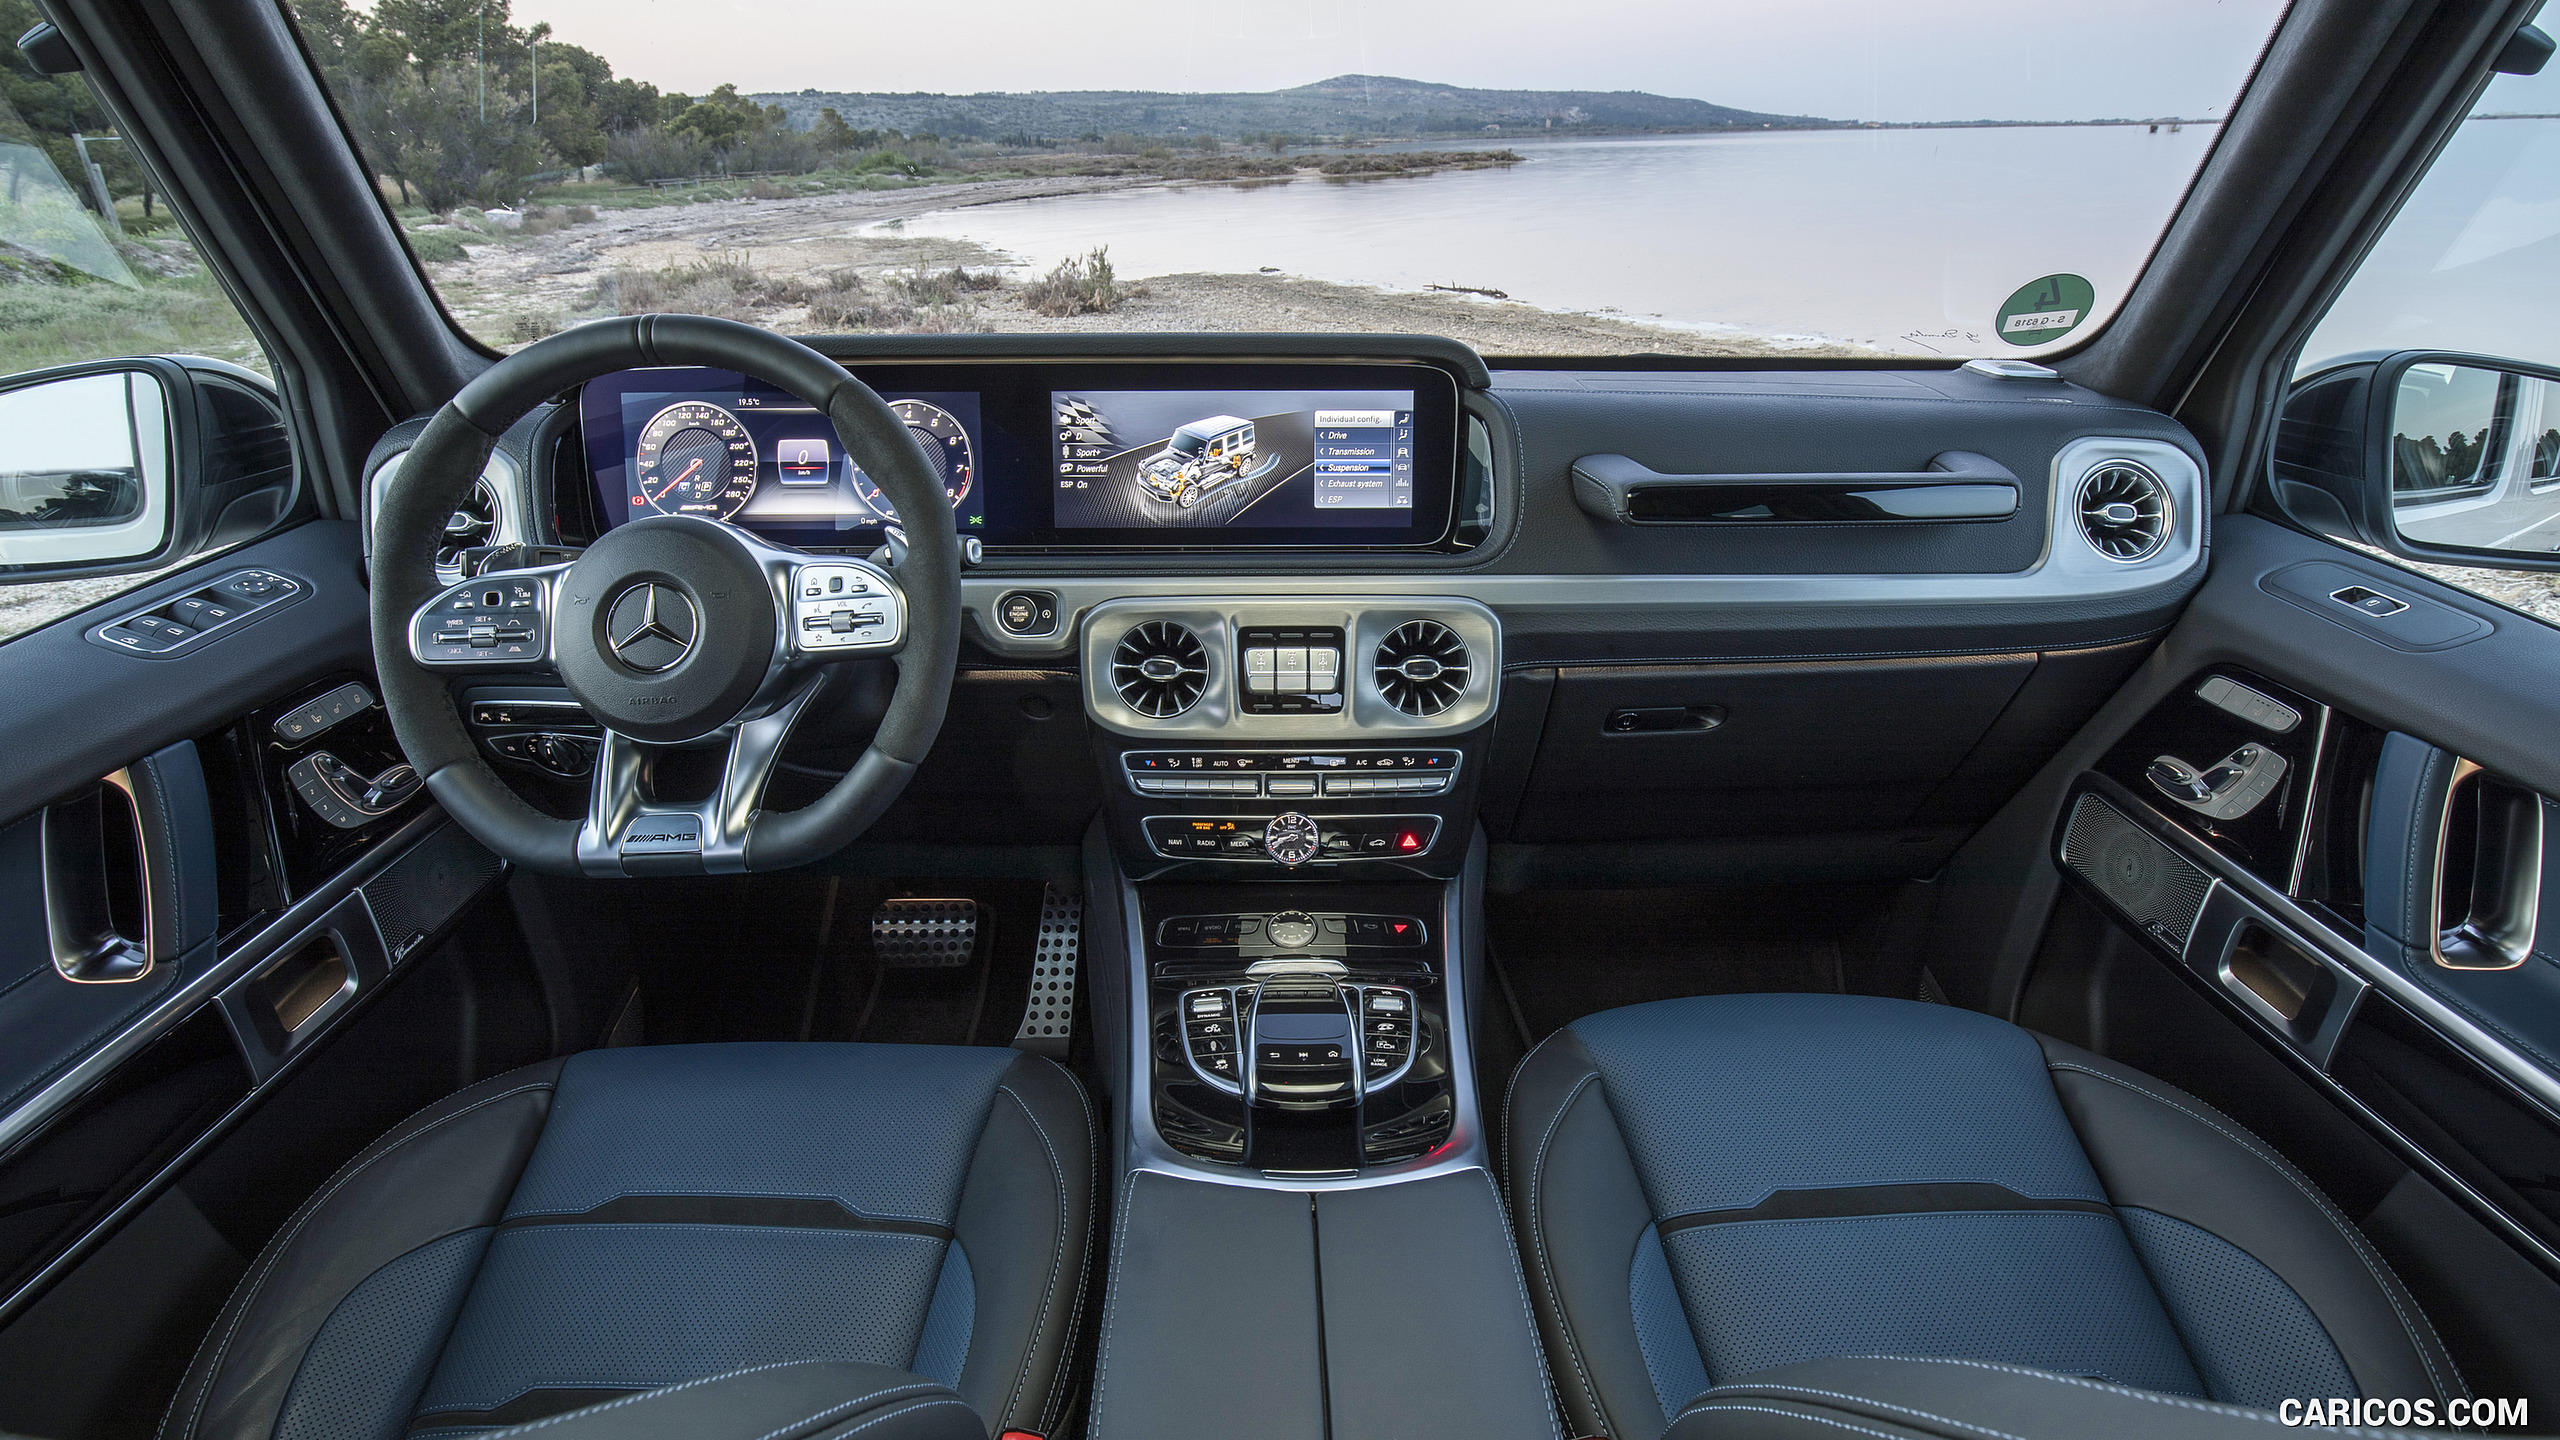 2019 Mercedes-AMG G63 - Interior, Cockpit, #125 of 452